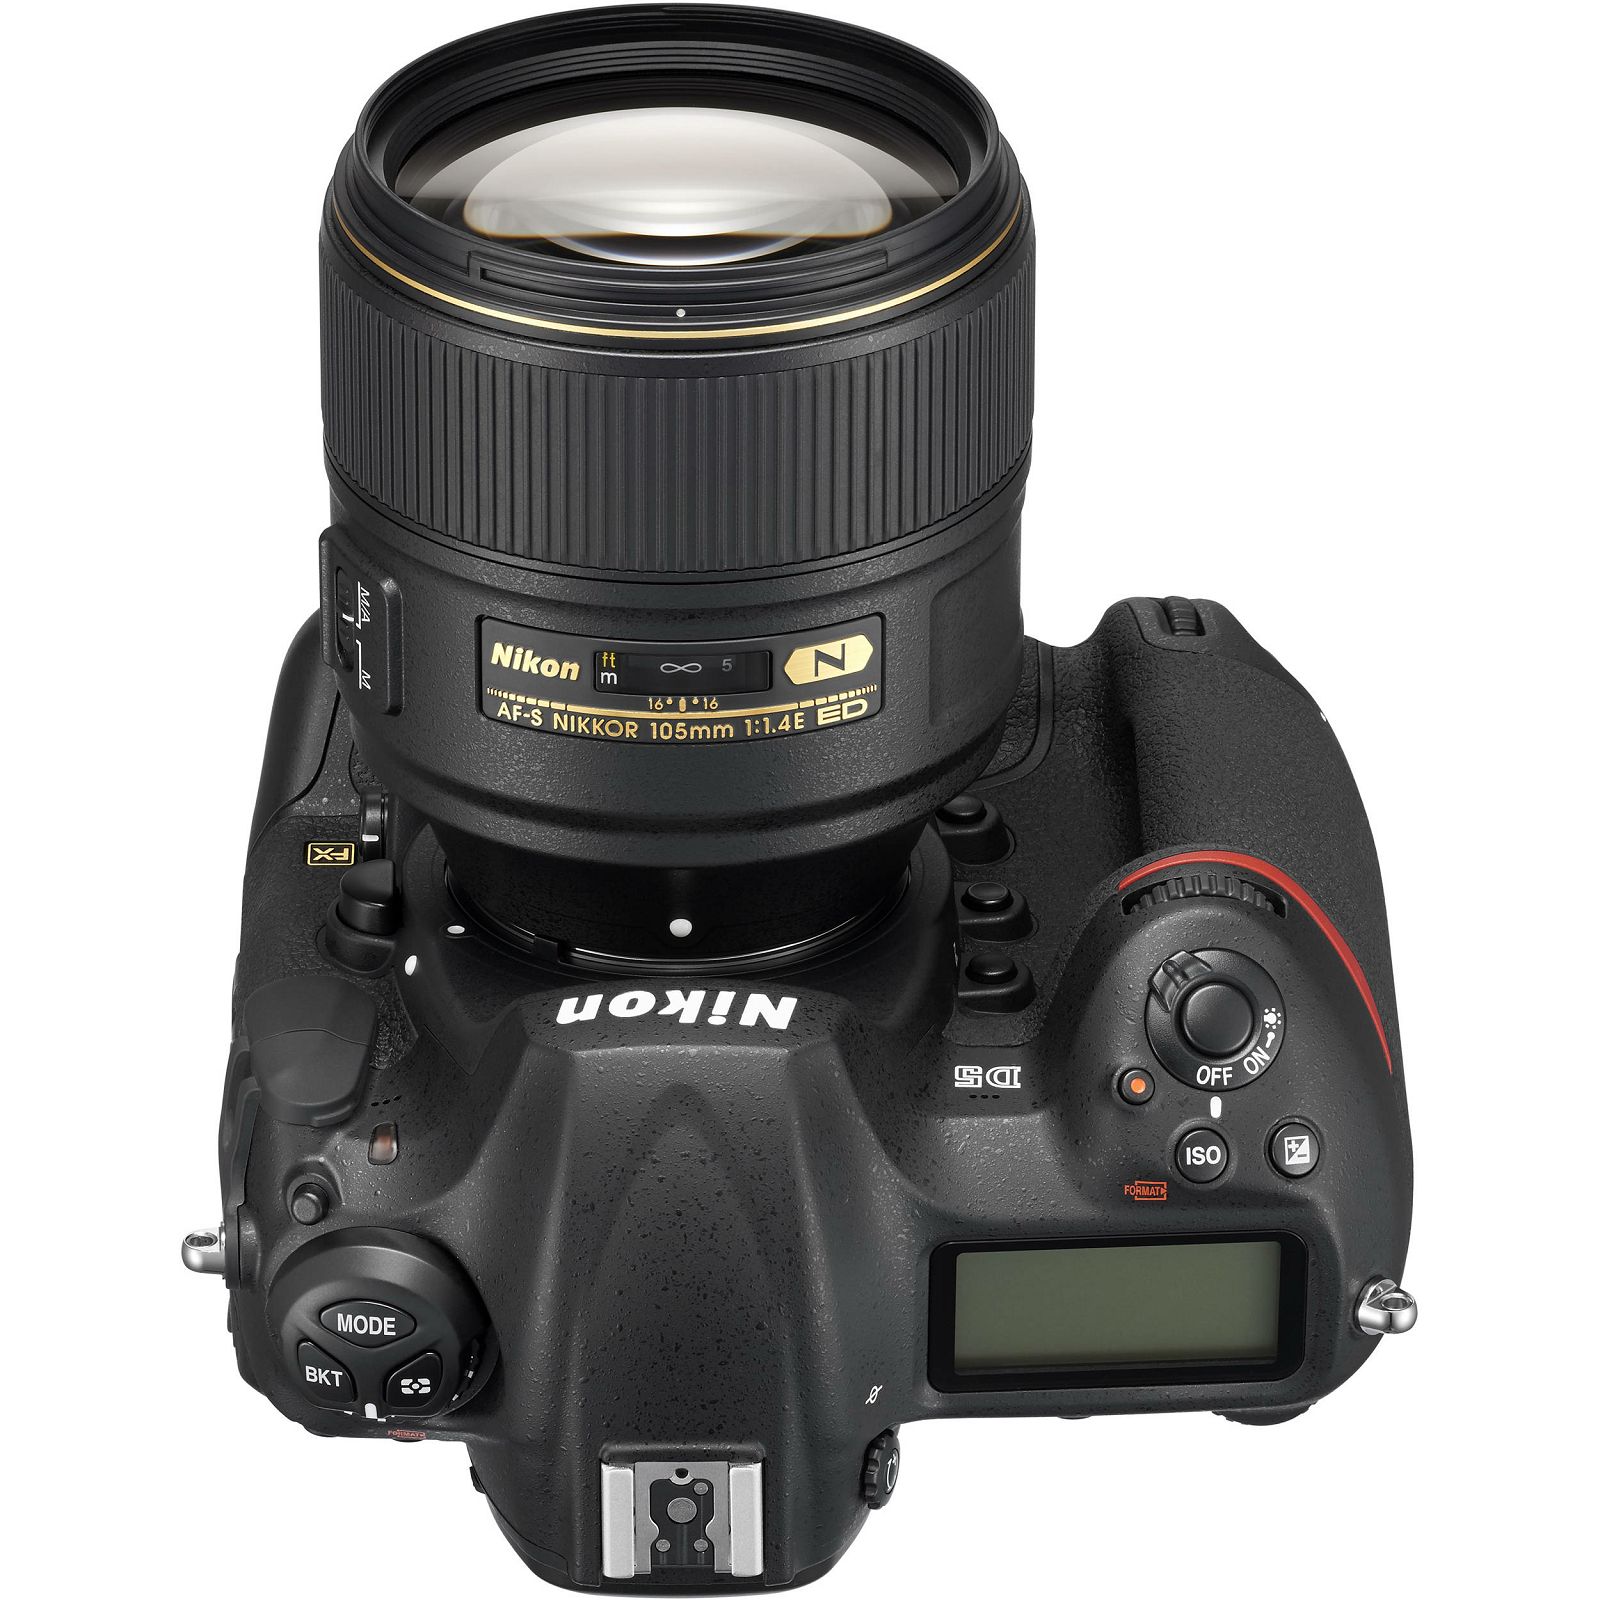 Nikon AF-S 105mm f/1.4E ED FX portretni telefoto objektiv fiksne žarišne duljine Nikkor auto focus prime lens 105 f1.4E 1.4 F1.4 f/1.4 E (JAA343DA)